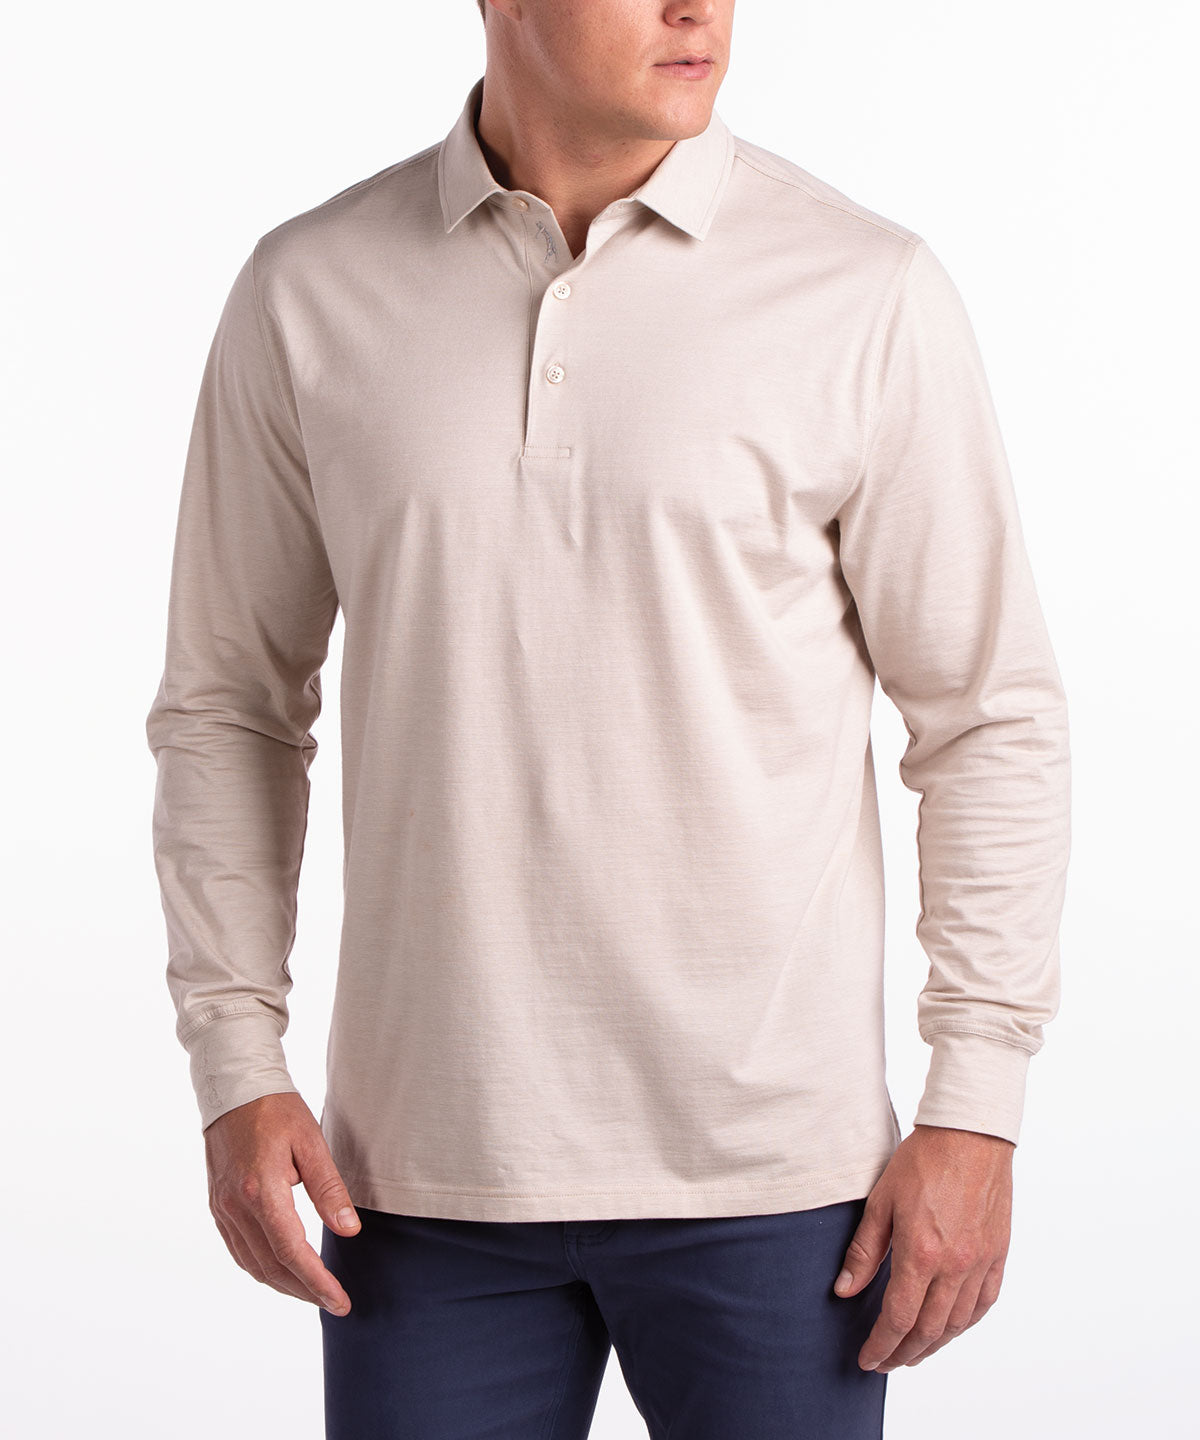 Bobby Jones Long-Sleeve Button-Down Polo Shirt